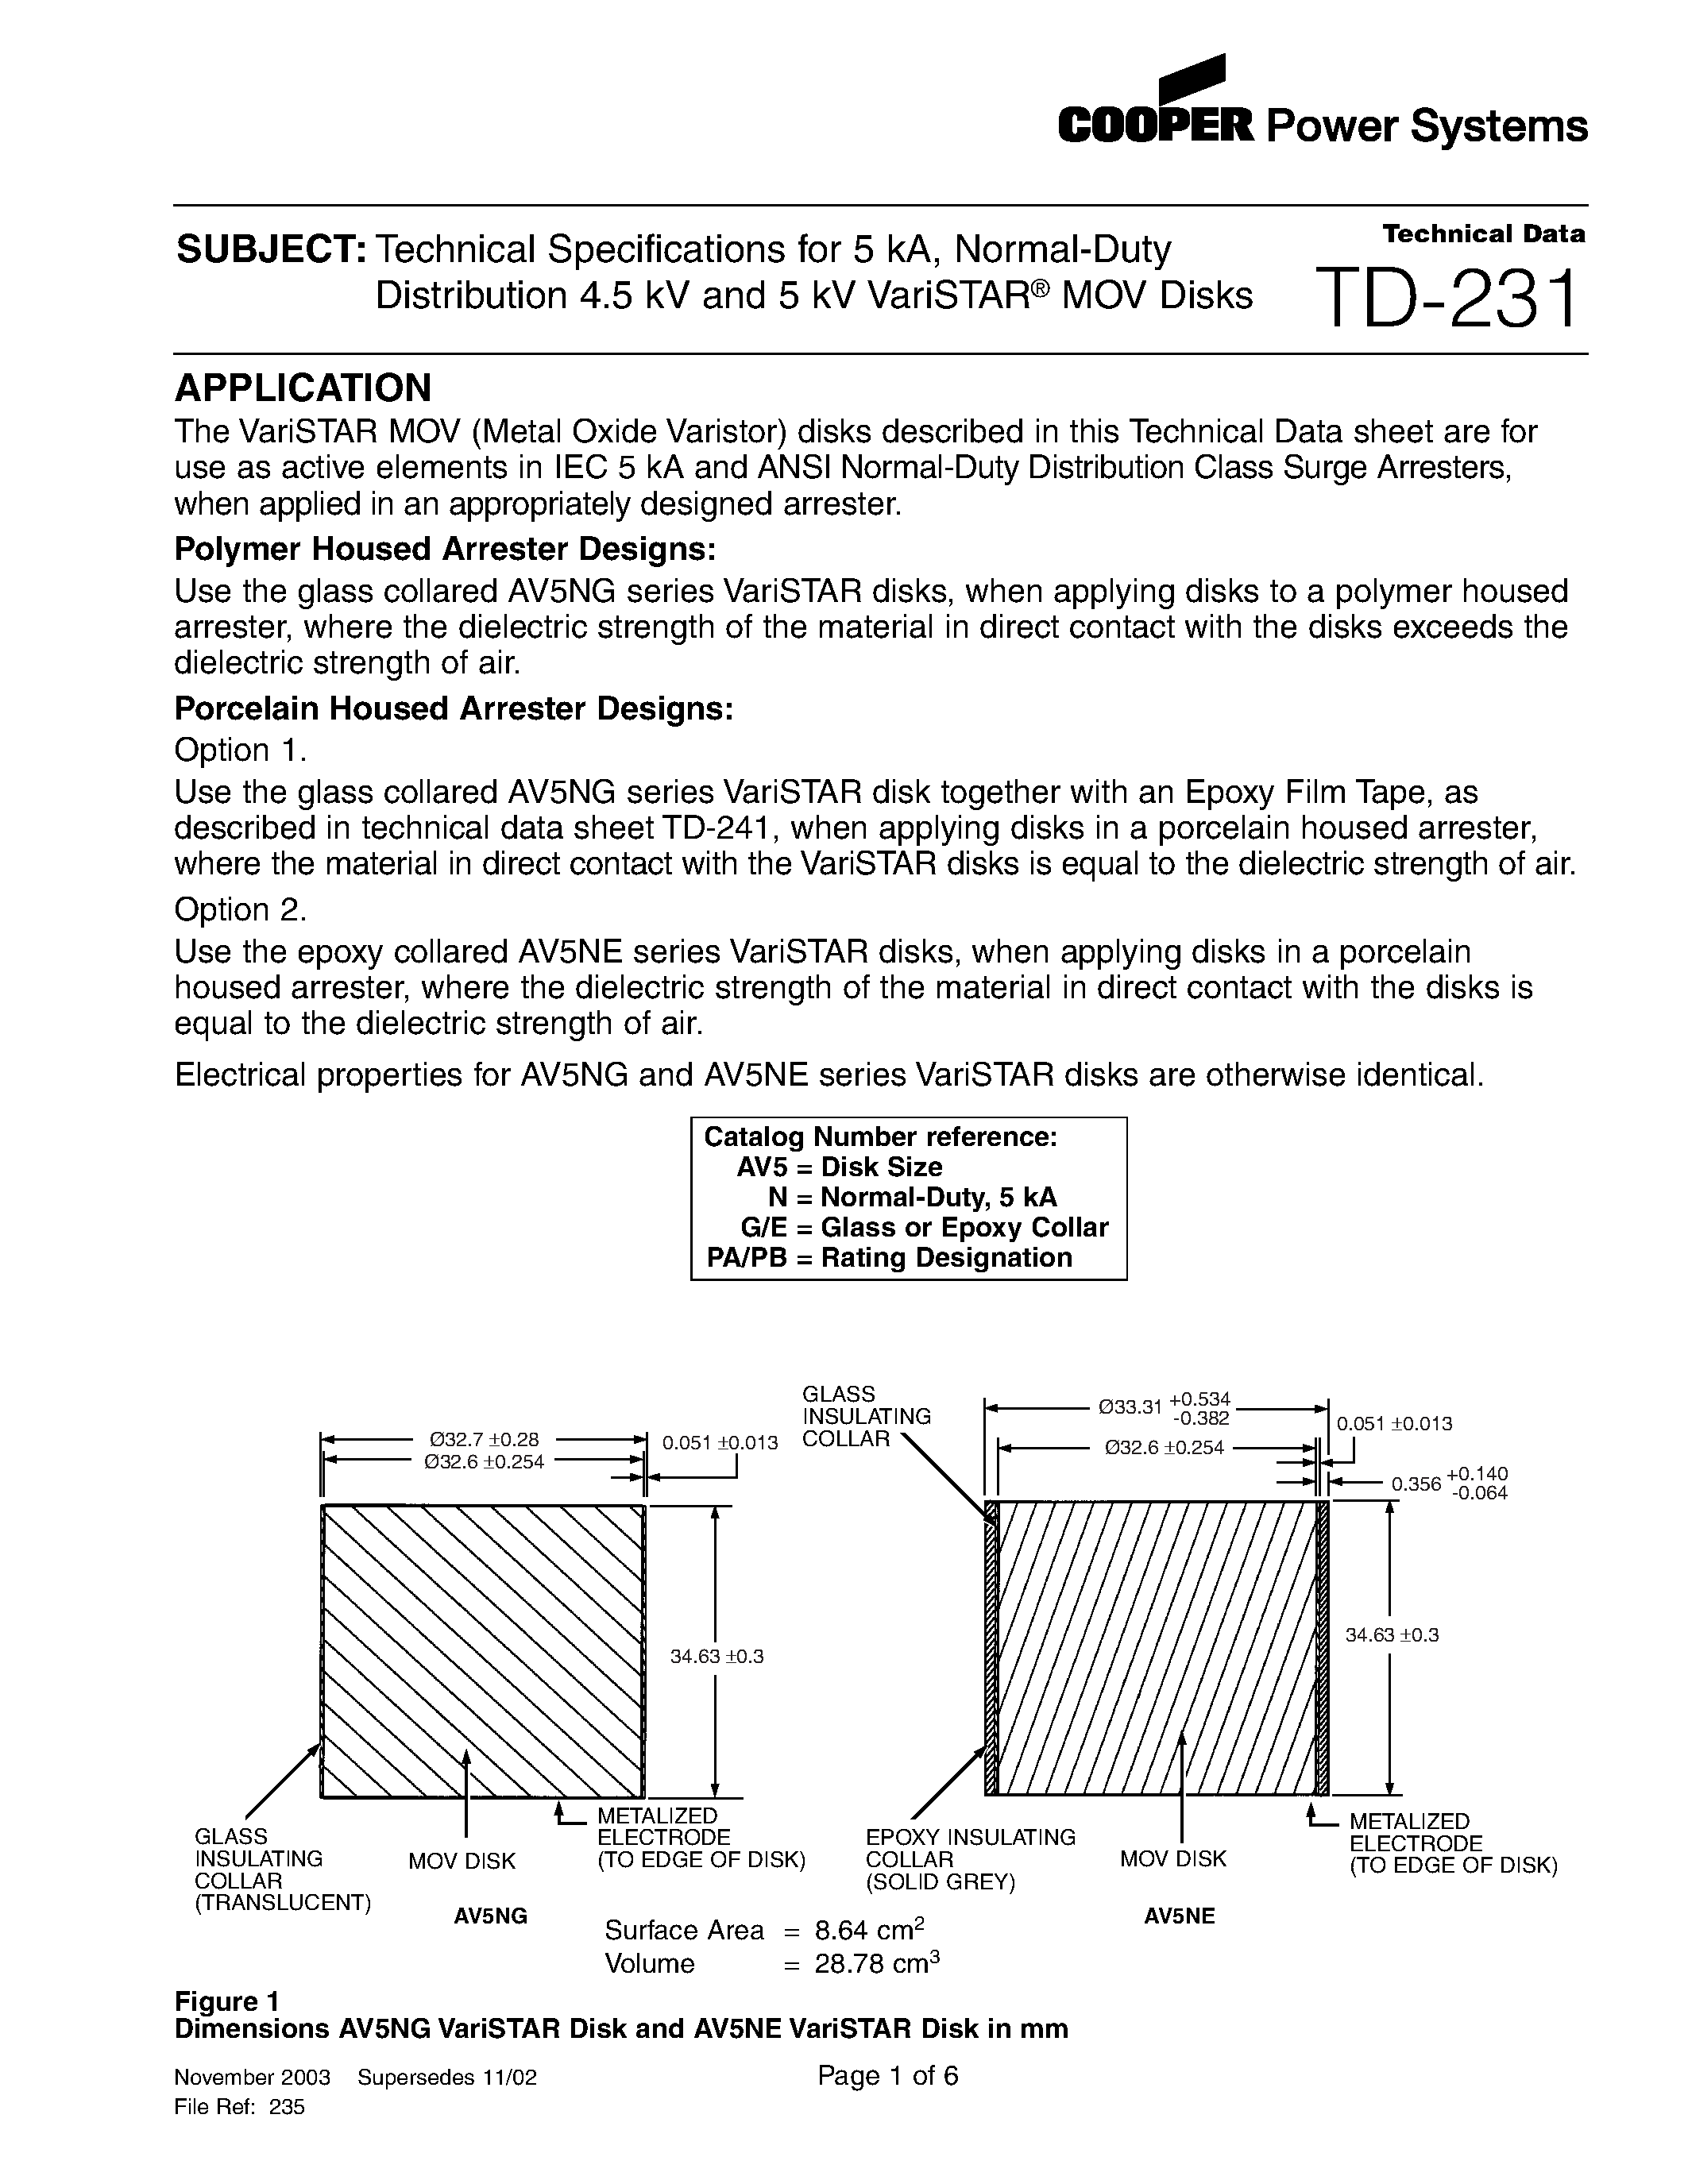 Datasheet TD231 - Technical Specifications for 5 kA/ Normal-Duty Distribution 4.5 kV and 5 kV VariSTAR MOV Disks page 1